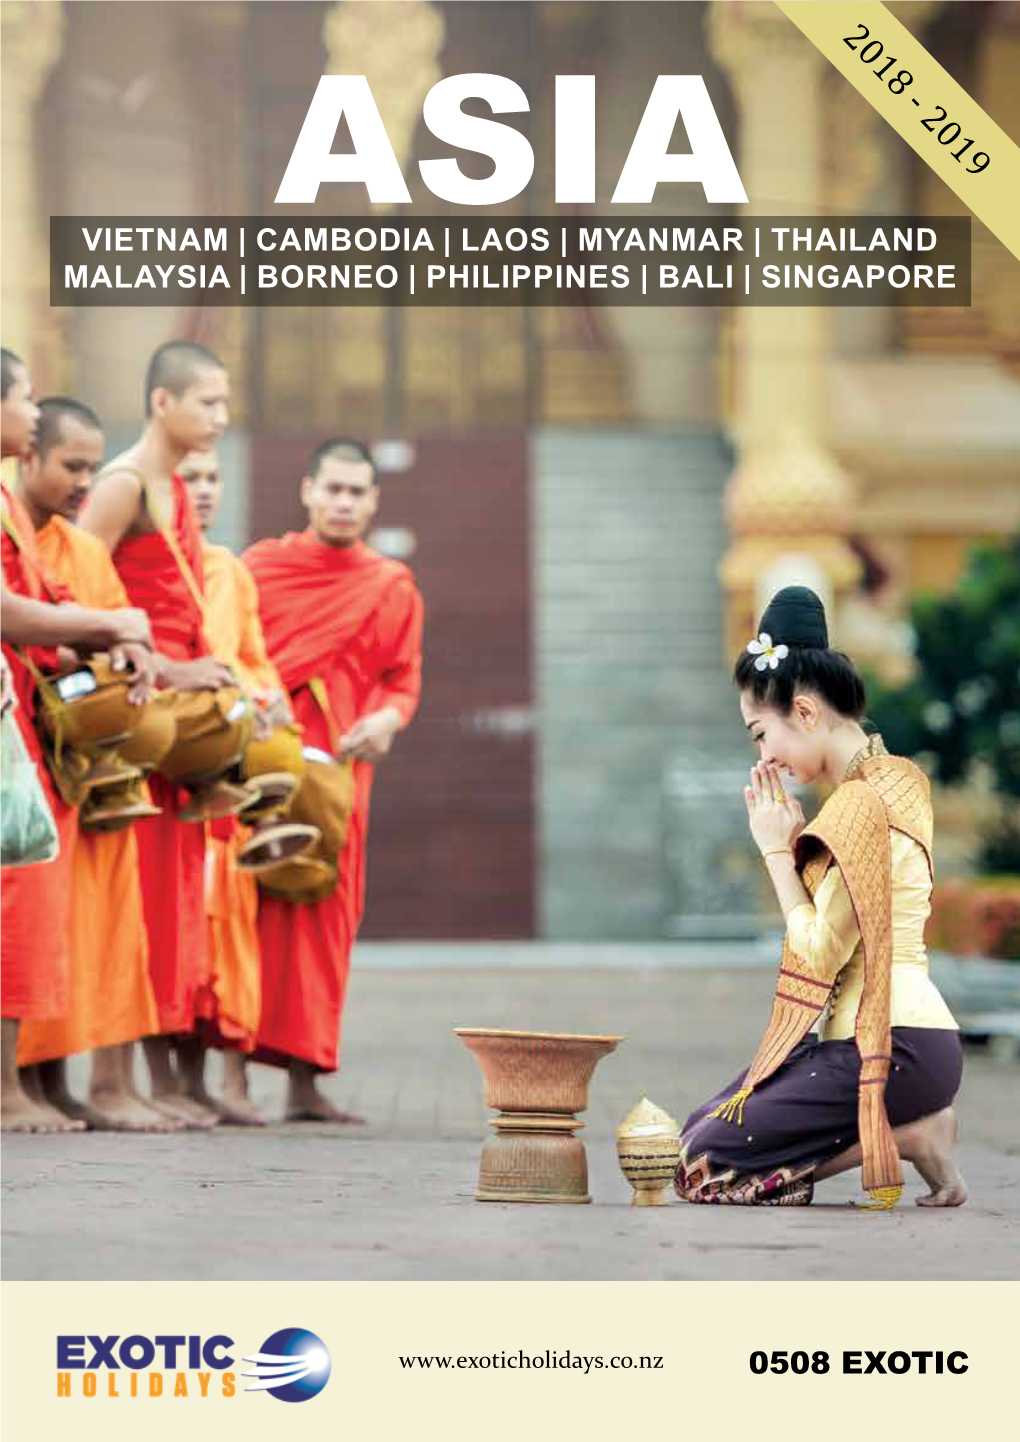 Vietnam | Cambodia | Laos | Myanmar | Thailand Malaysia | Borneo | Philippines | Bali | Singapore